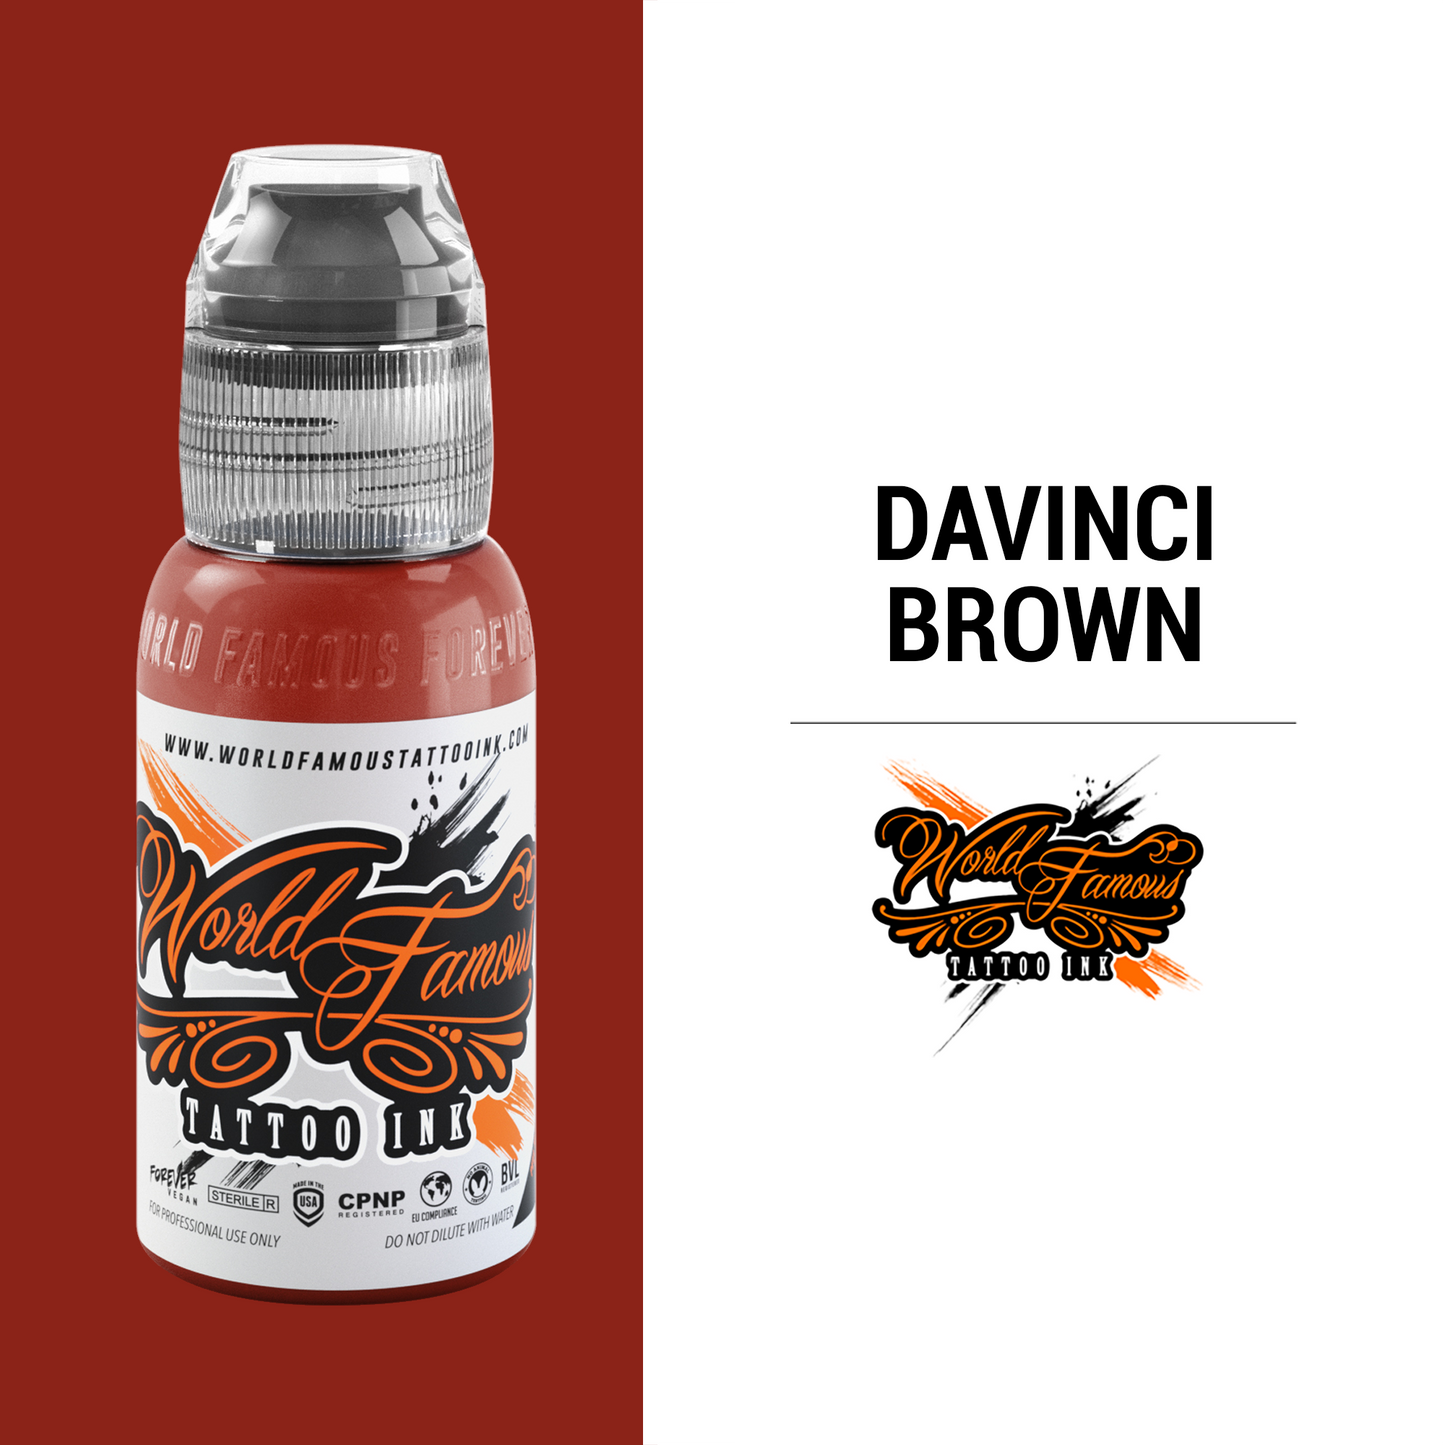 Davinci Brown | World Famous Tattoo Ink